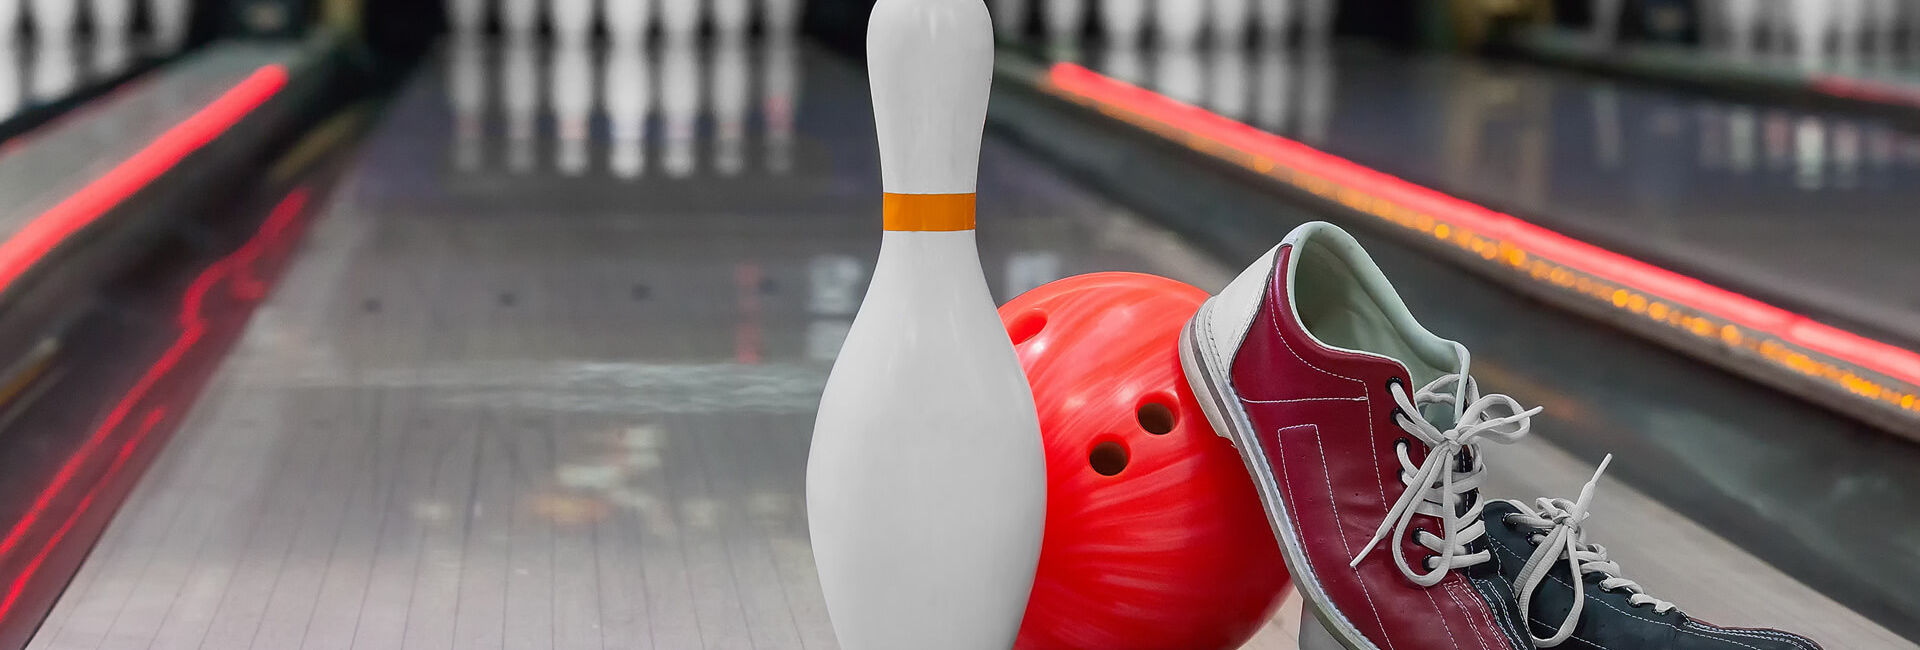 Bowling lane, bowling ball, bowling shoes, bowling pin